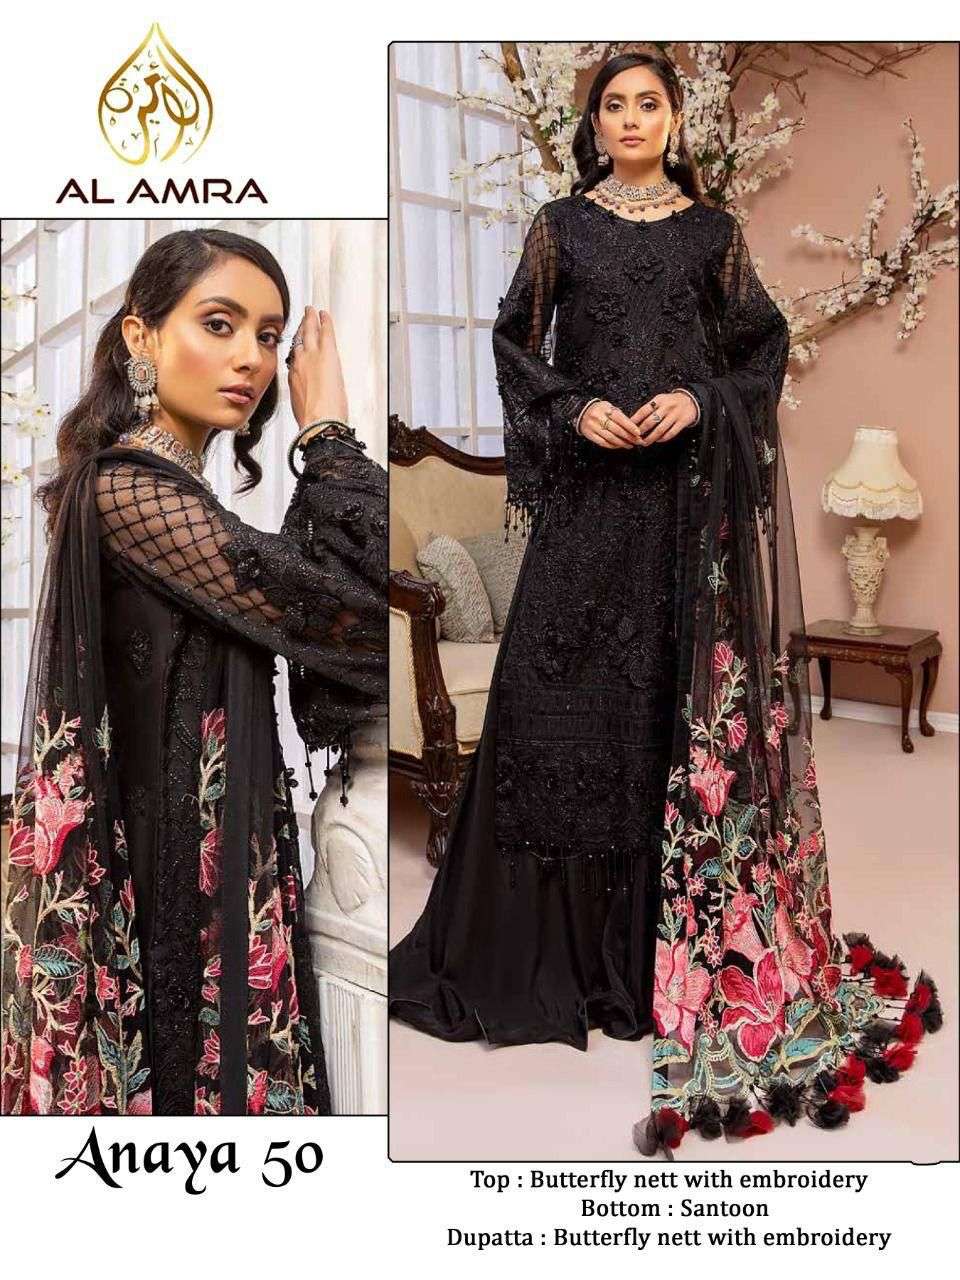 ANAYA ZF 50 BY AL AMRA BUTTERFLY NET EMBORIDERED PAKISTANI DRESS